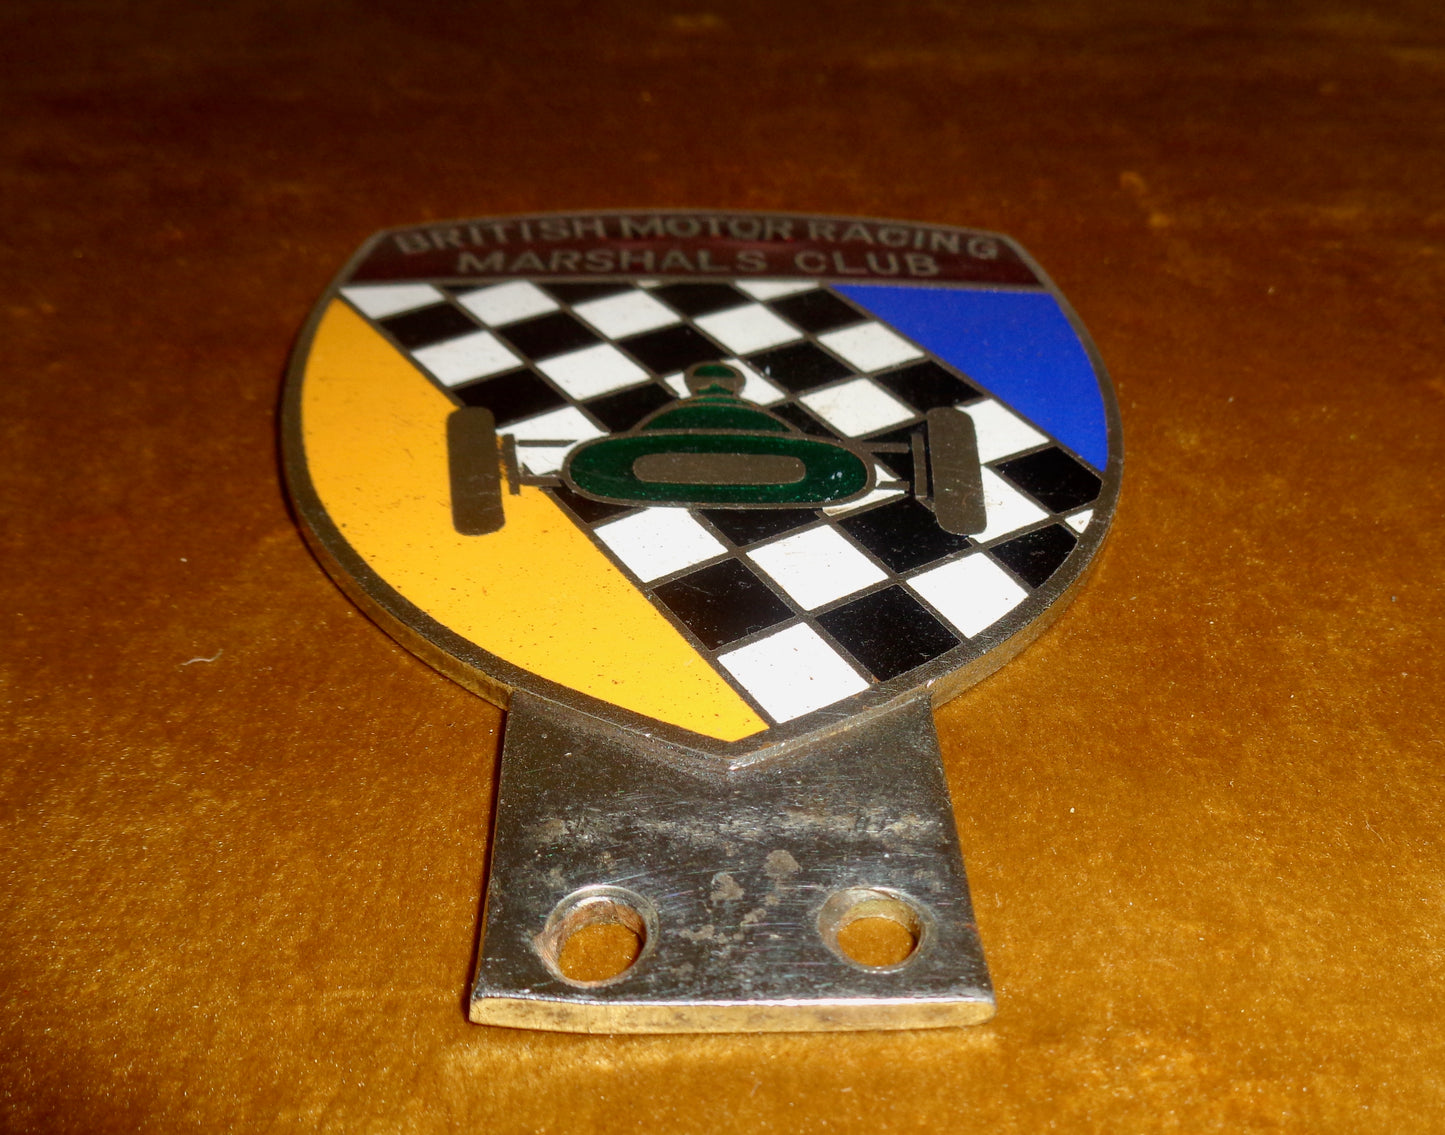 Original 1950s Enamel Car Badge British Motor Racing Marshals Club By Marples & Beasley